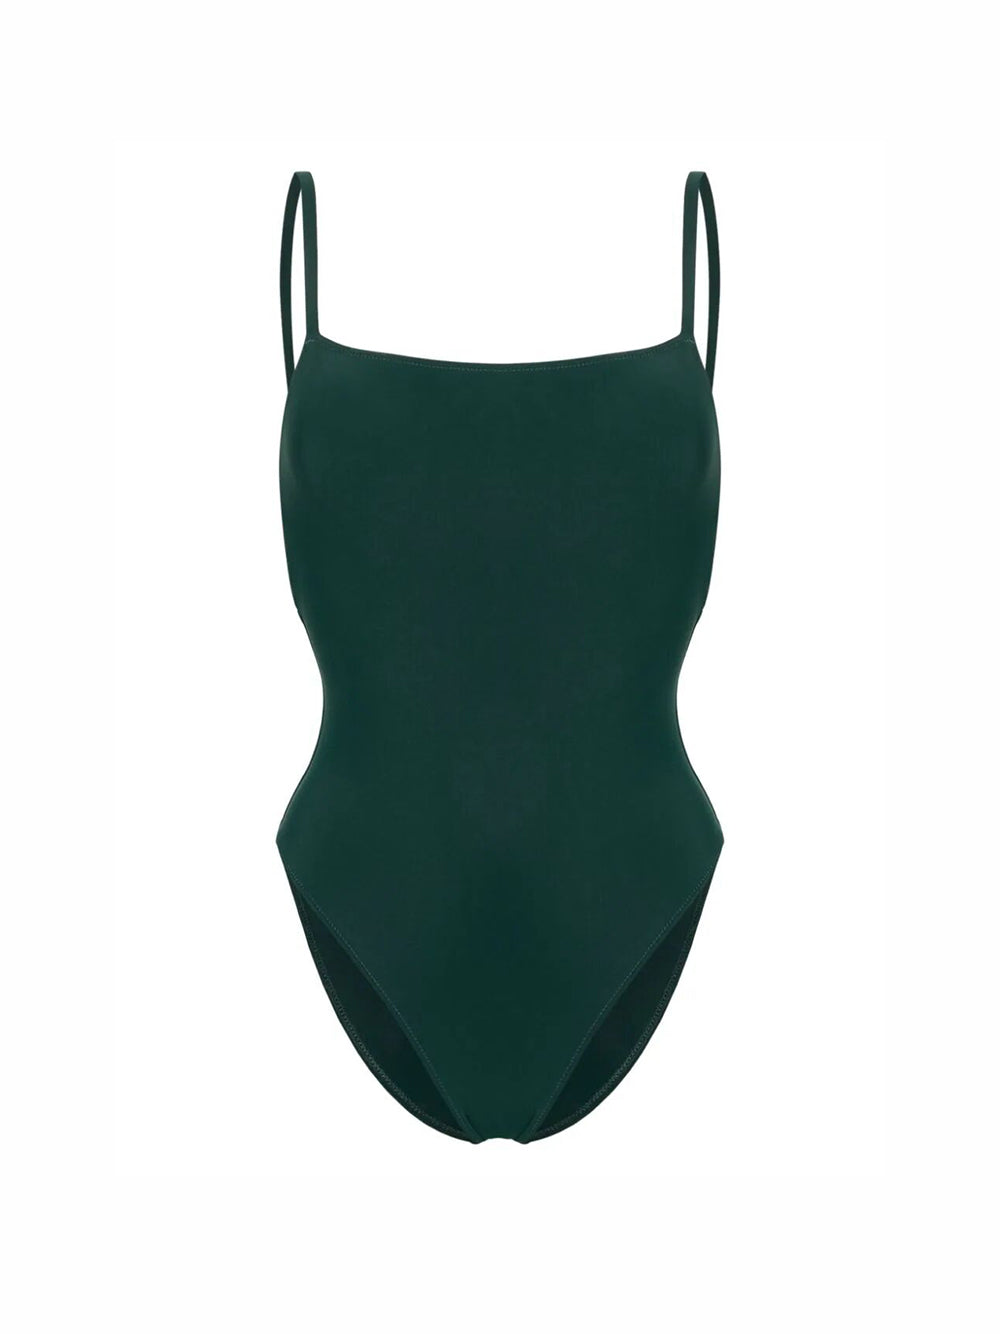 Tre one-piece geometrical strap swimsuit